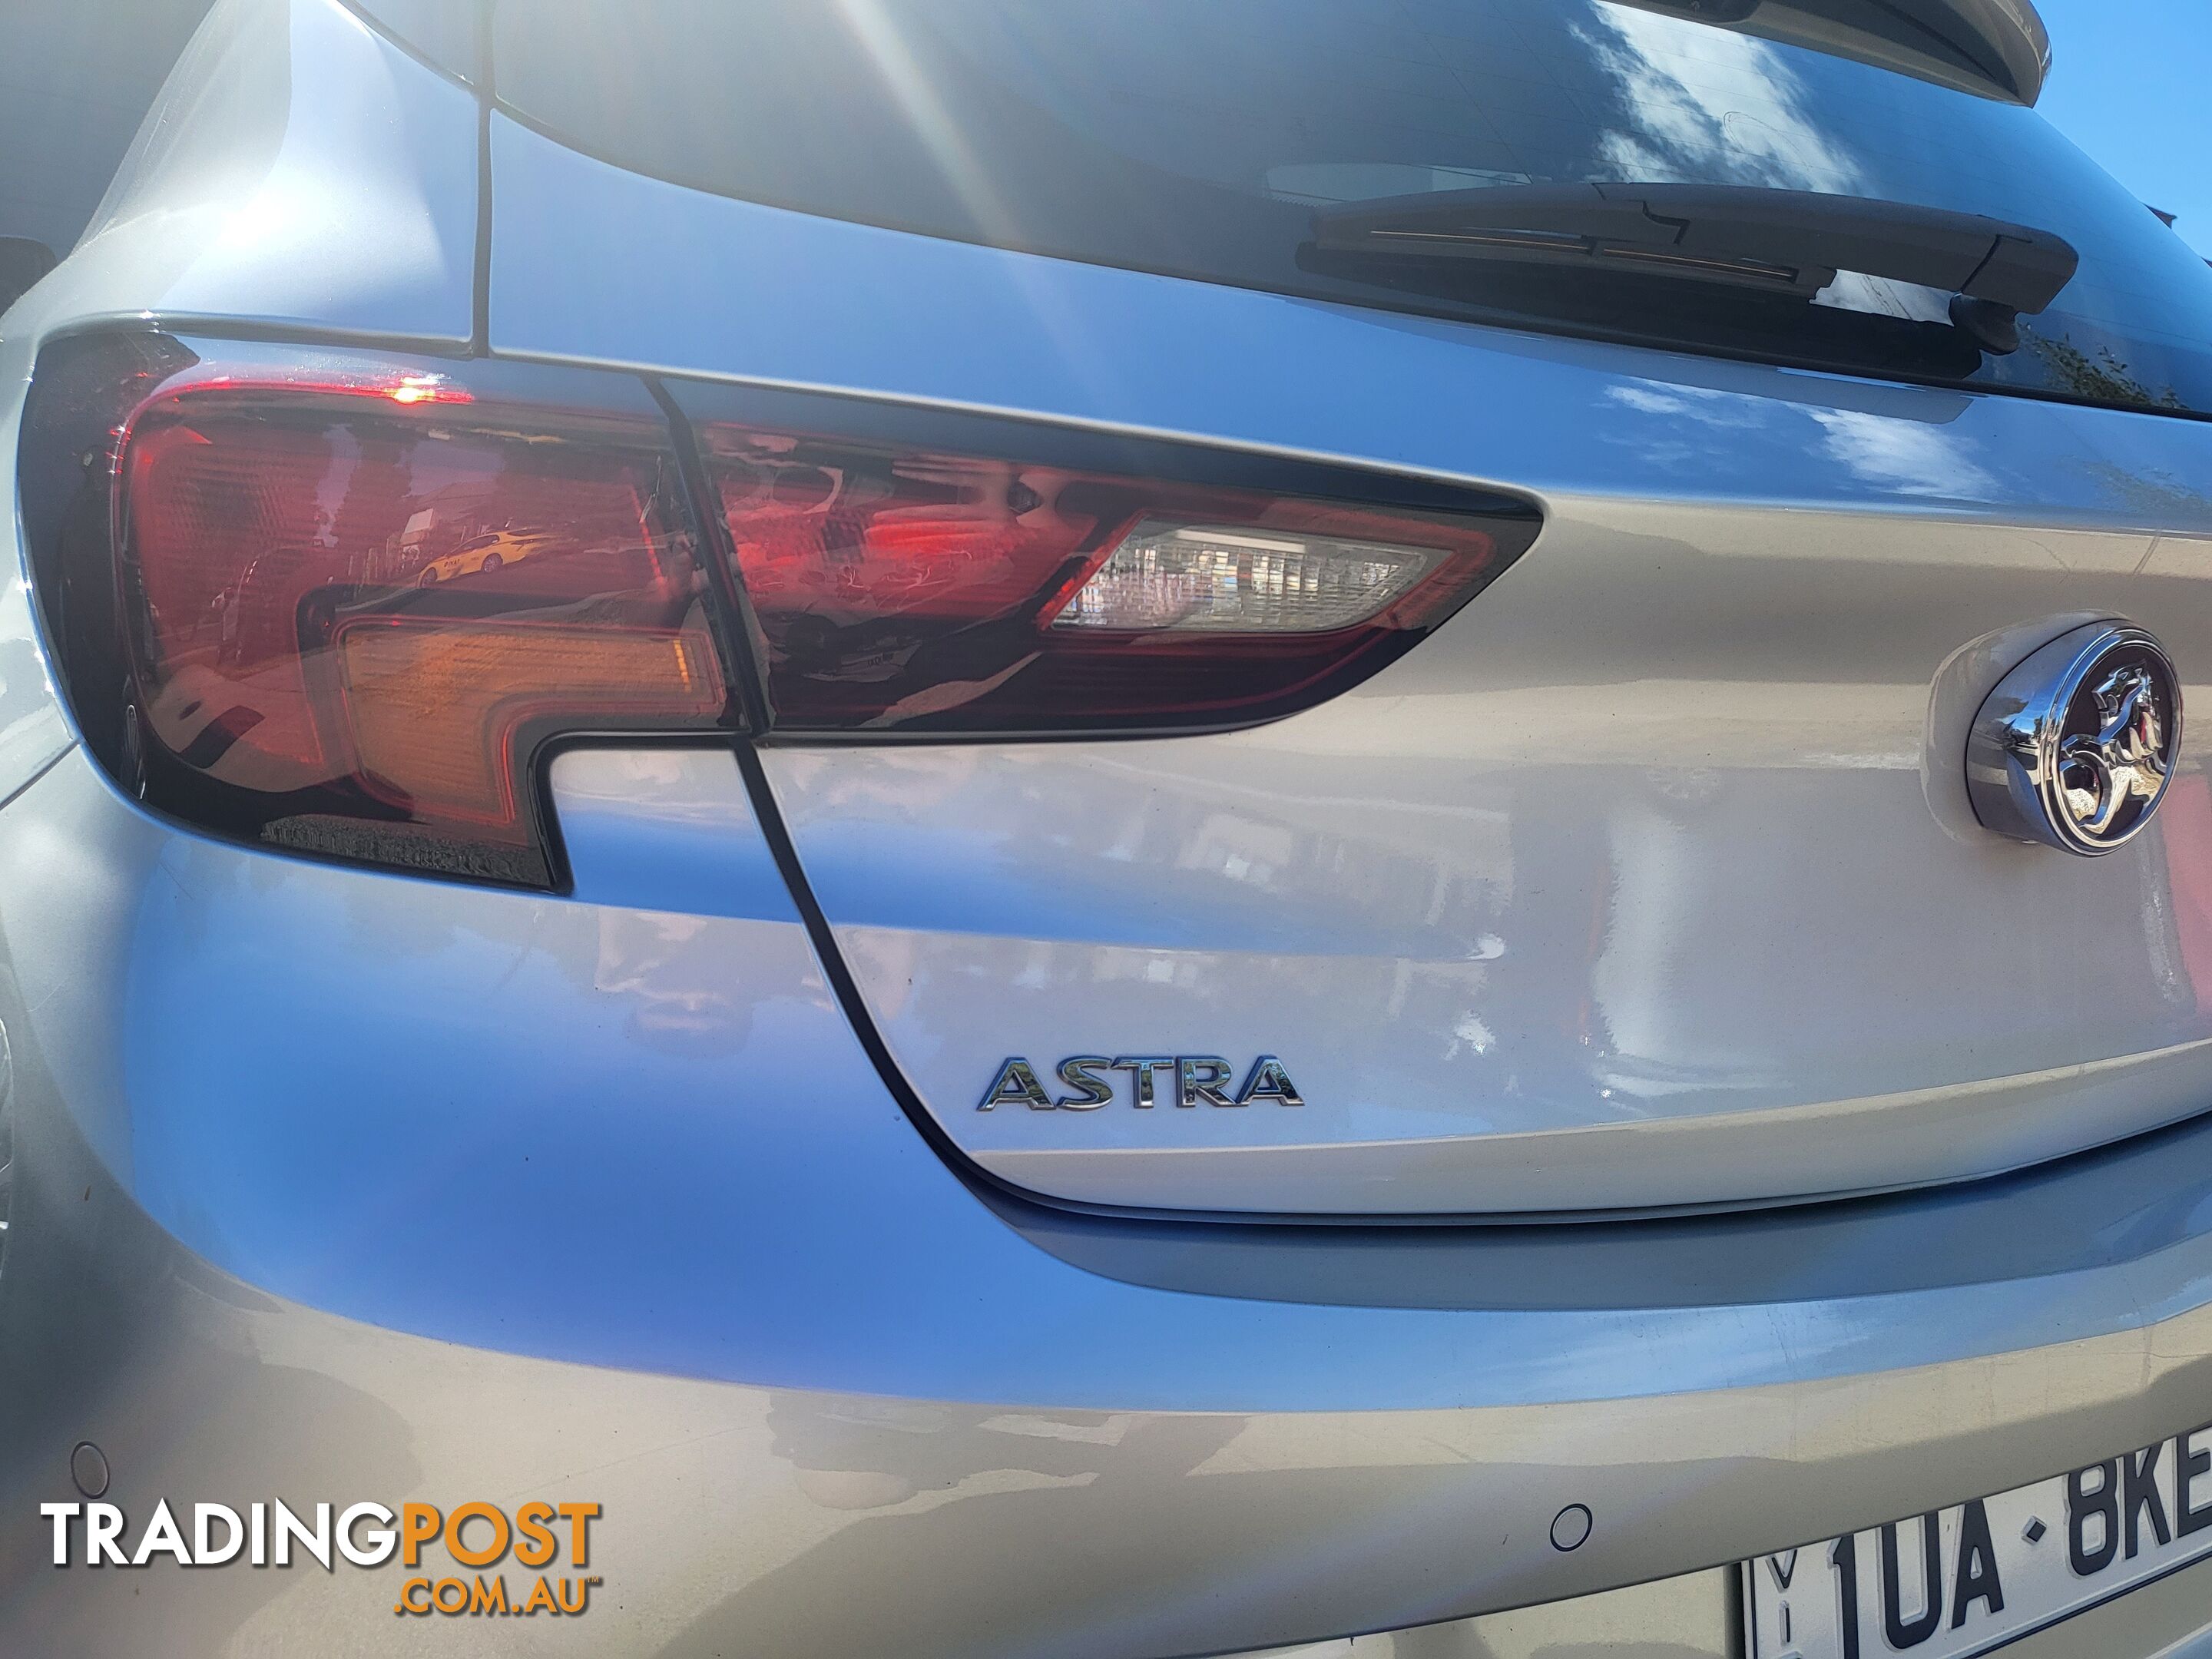 2018 Holden Astra BK R+ Hatchback Automatic